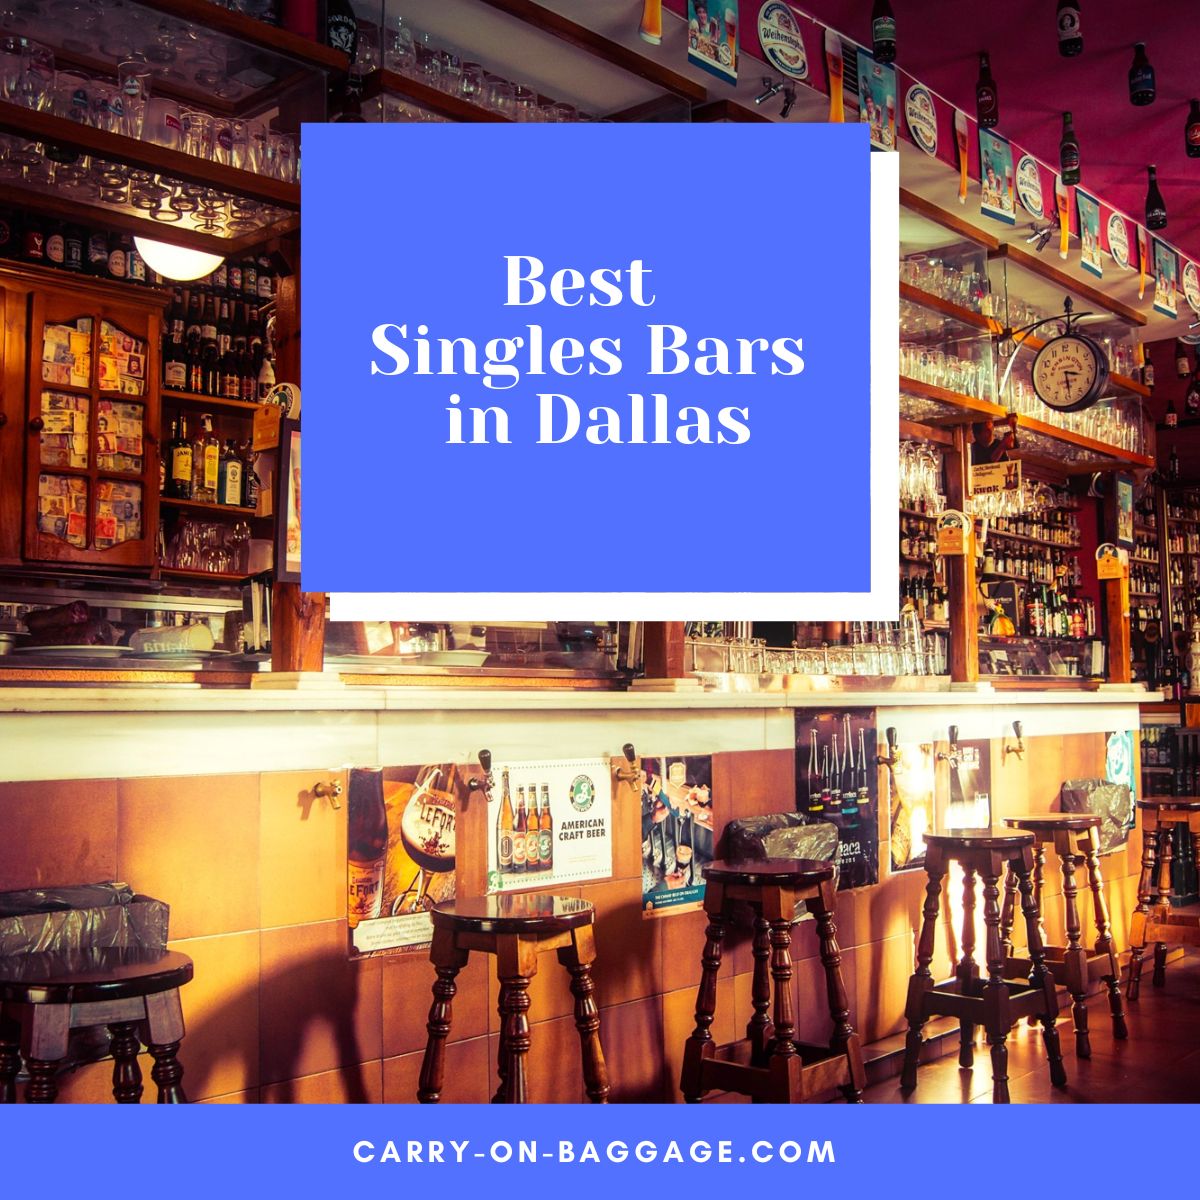 Best Singles Bars in Dallas